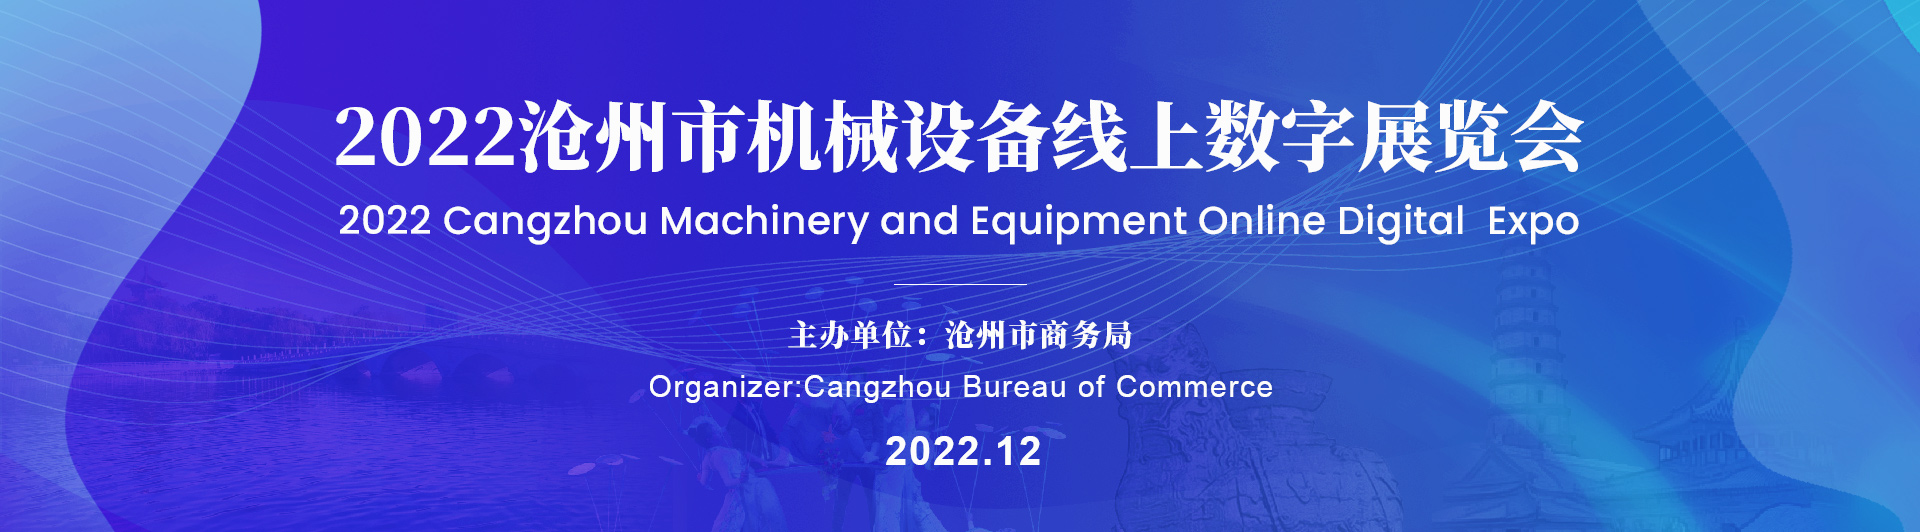 2022 Cangzhou Machinery and Equipment Online Digital Expo